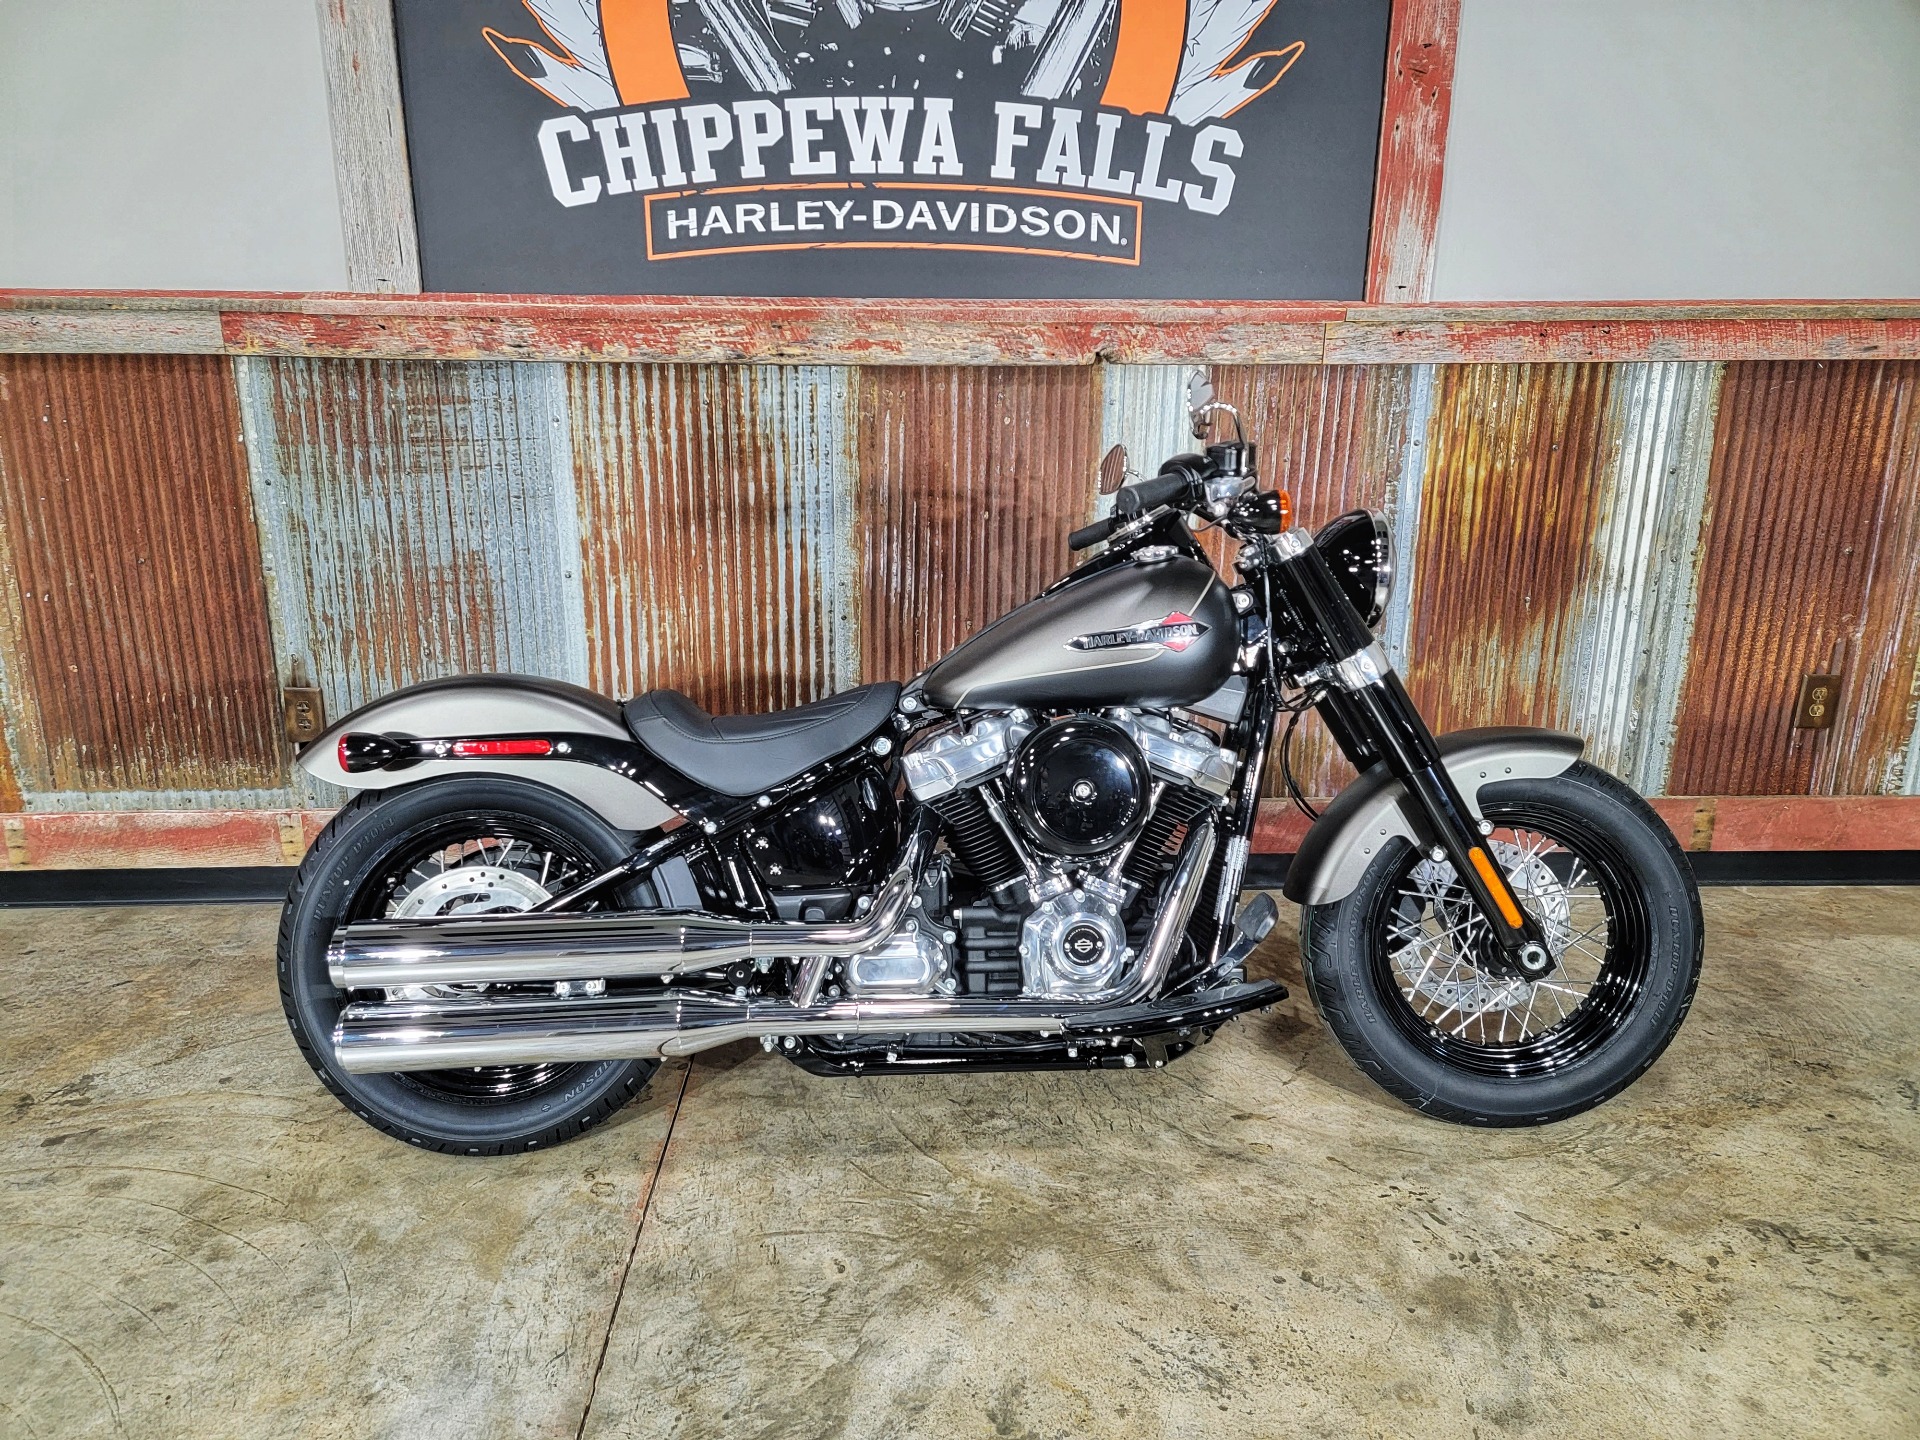 New 2021 Harley Davidson Softail Slim River Rock Gray Denim Black Denim Motorcycles In Chippewa Falls Wi Fx031690